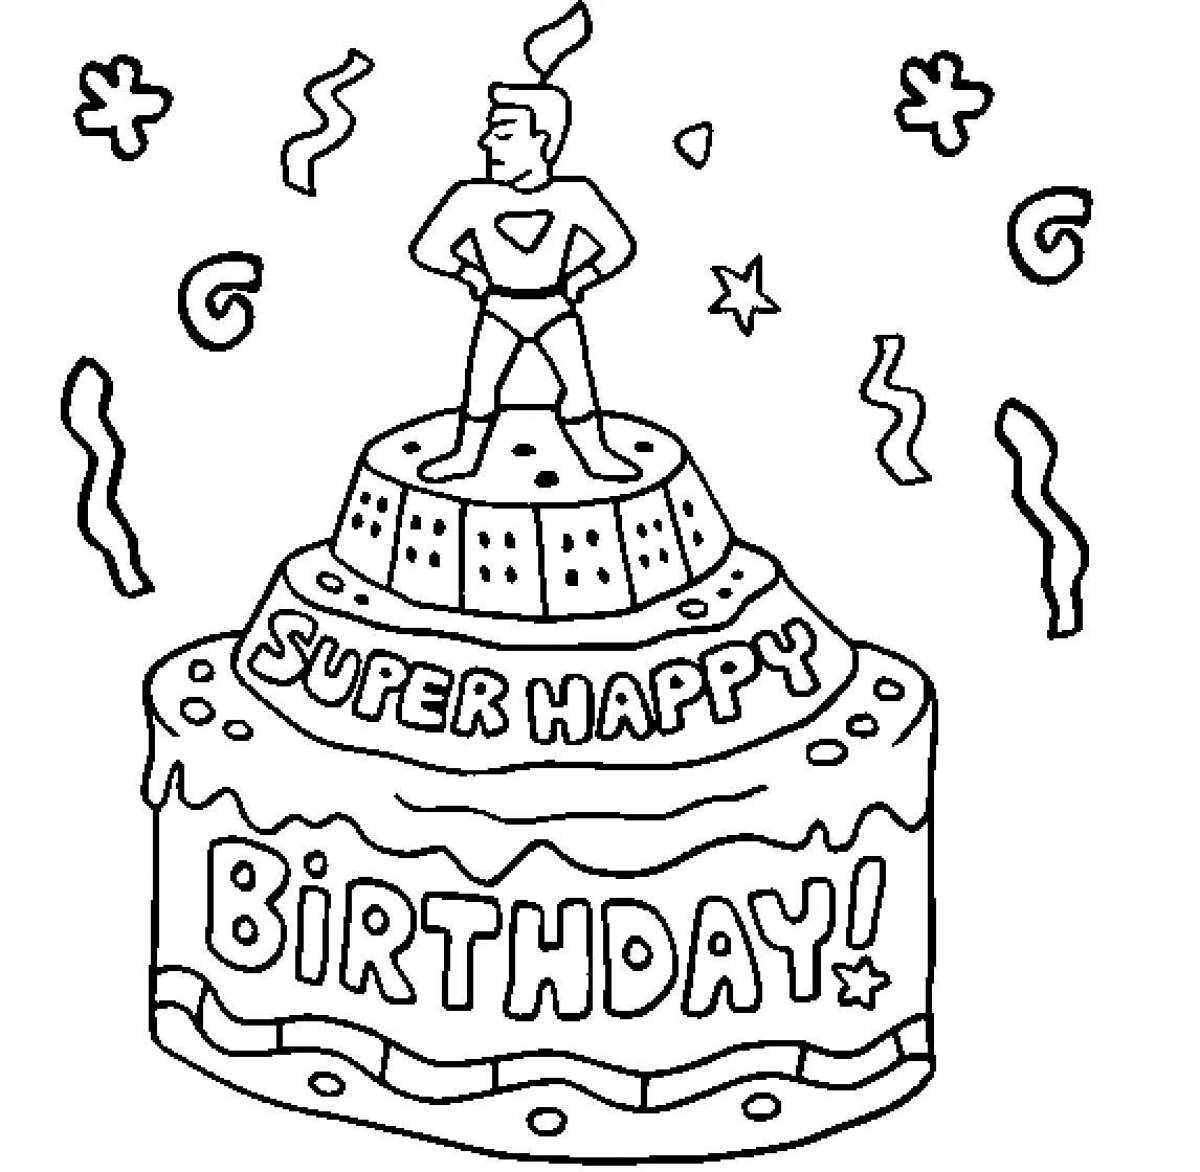 Radiant happy birthday dad coloring page